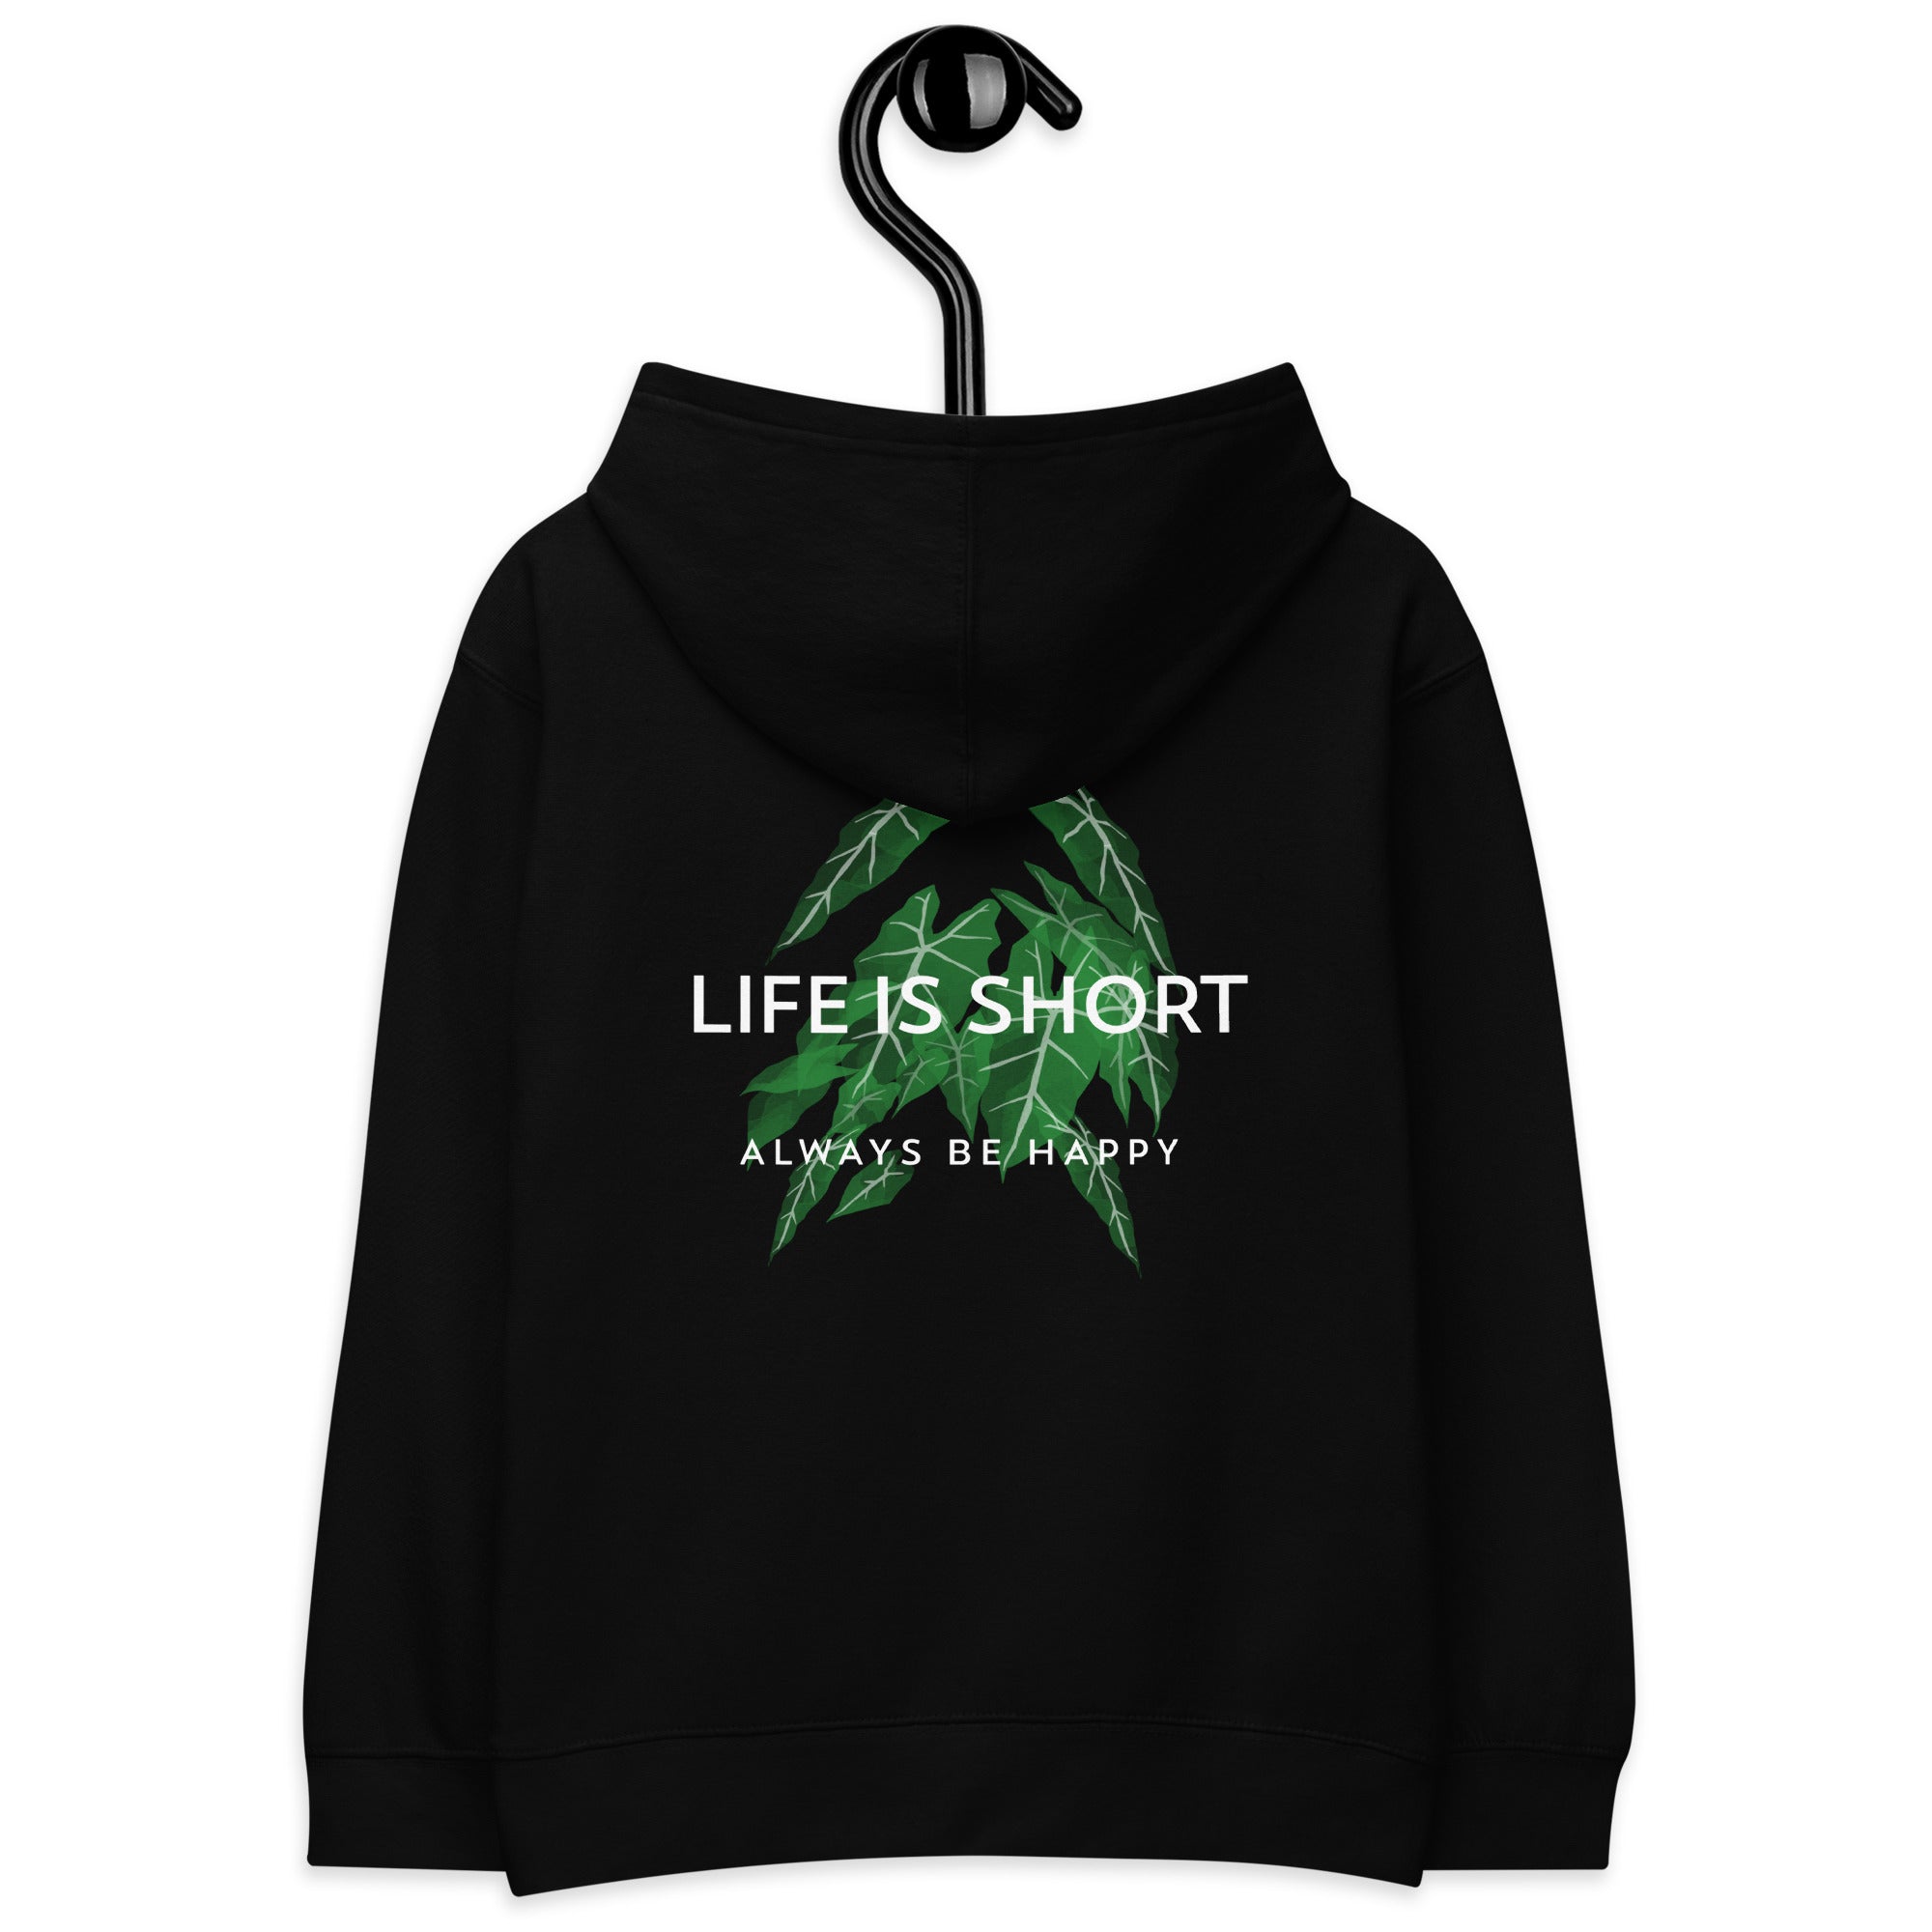 Life is short, always be happy - Kids fleece hoodie (back print)